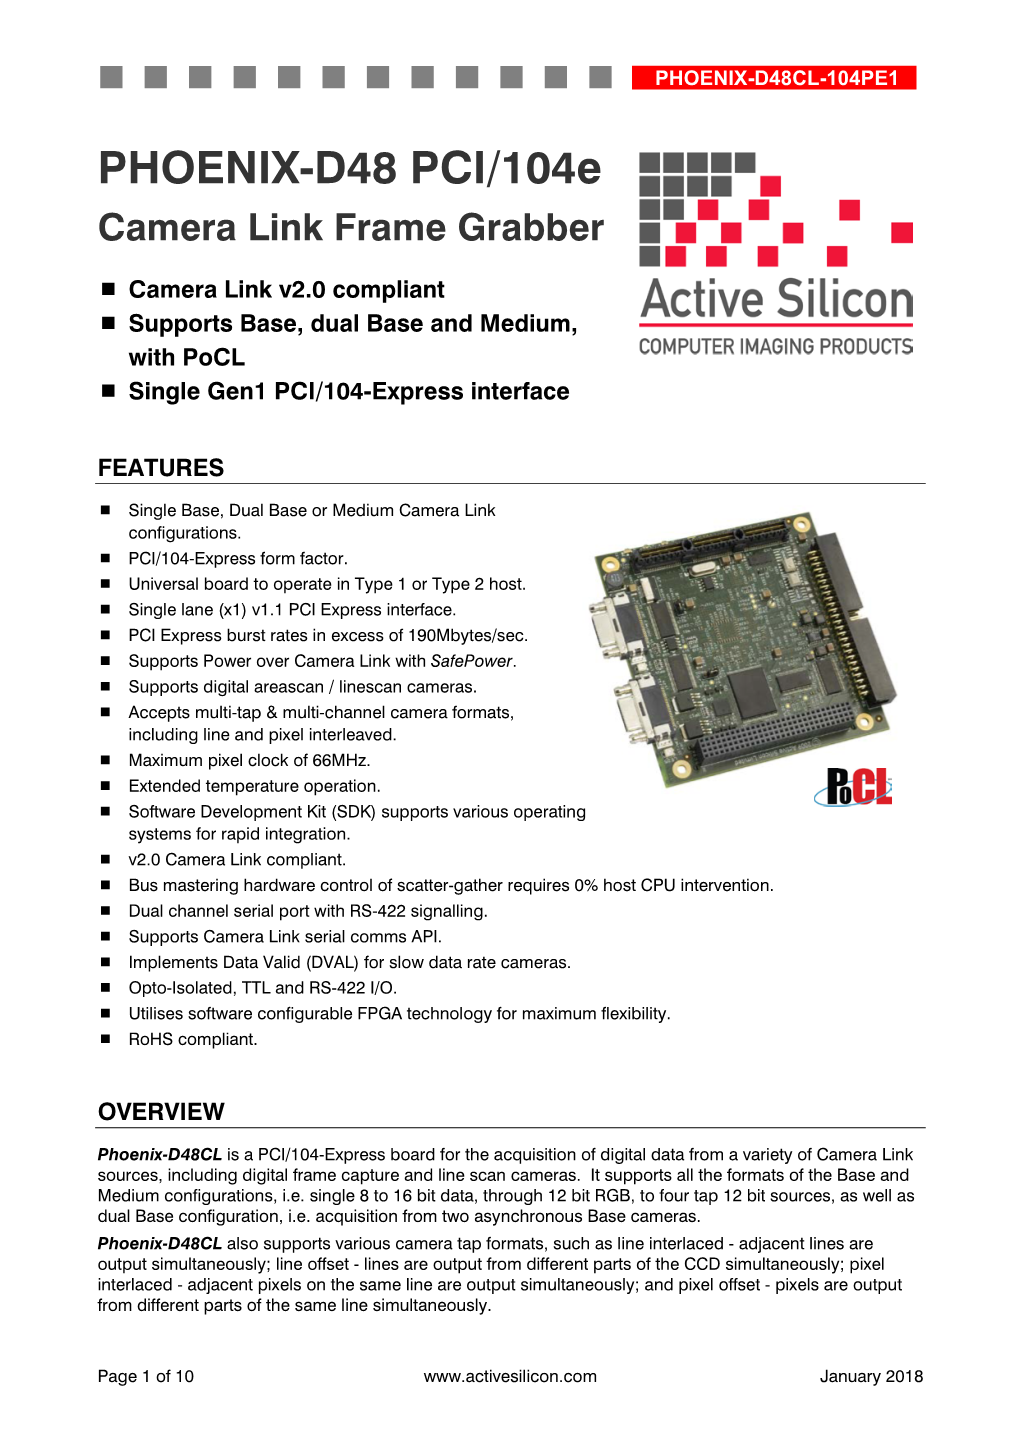 Phoenix D48 Camera Link PC104 Pcie